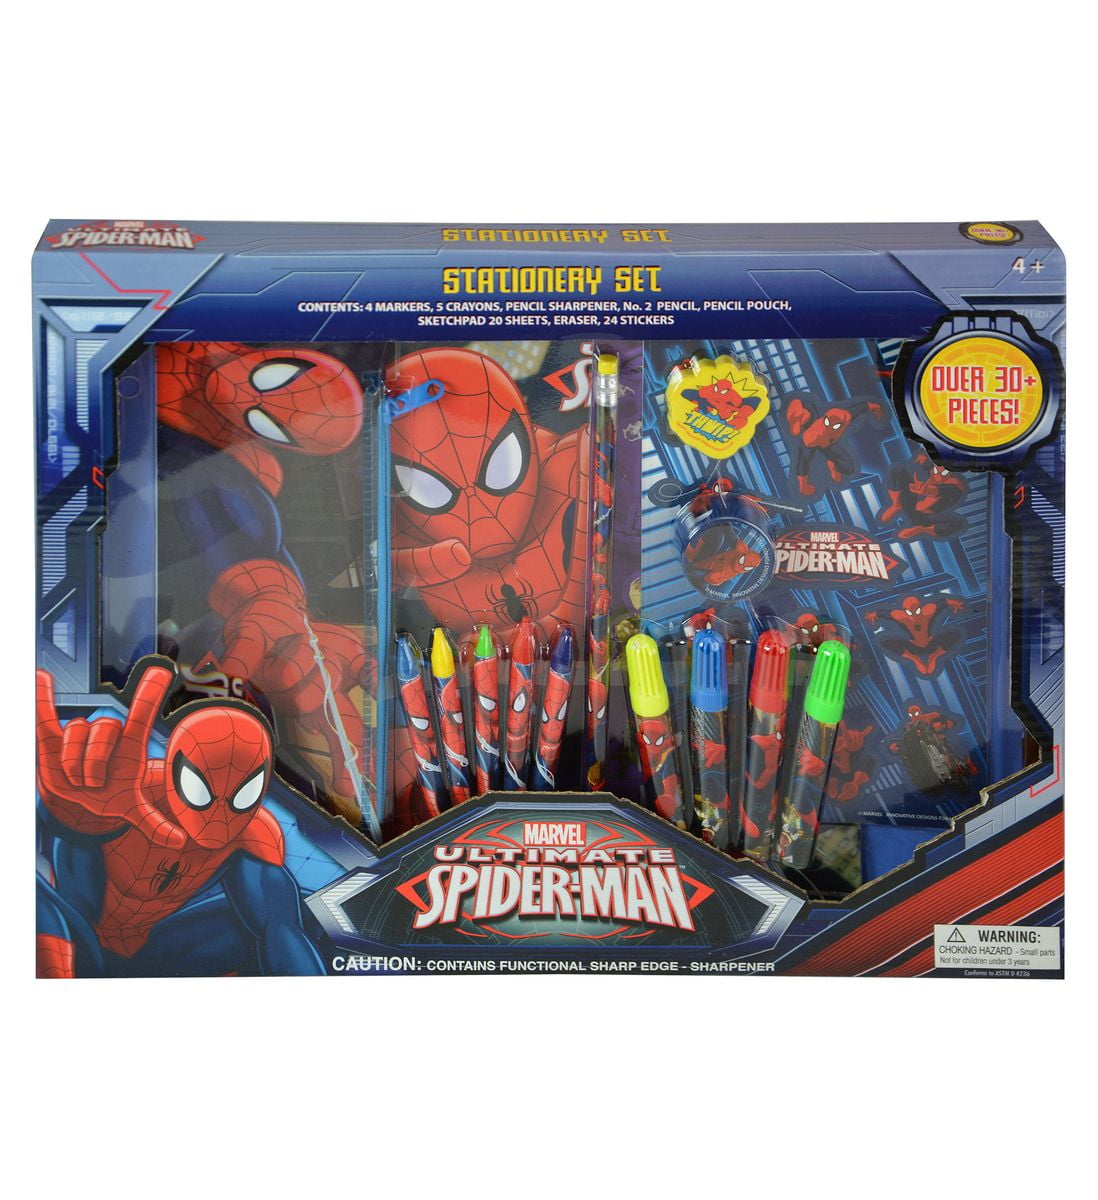 zlock Marvel Spiderman Classic 2 Pen Set